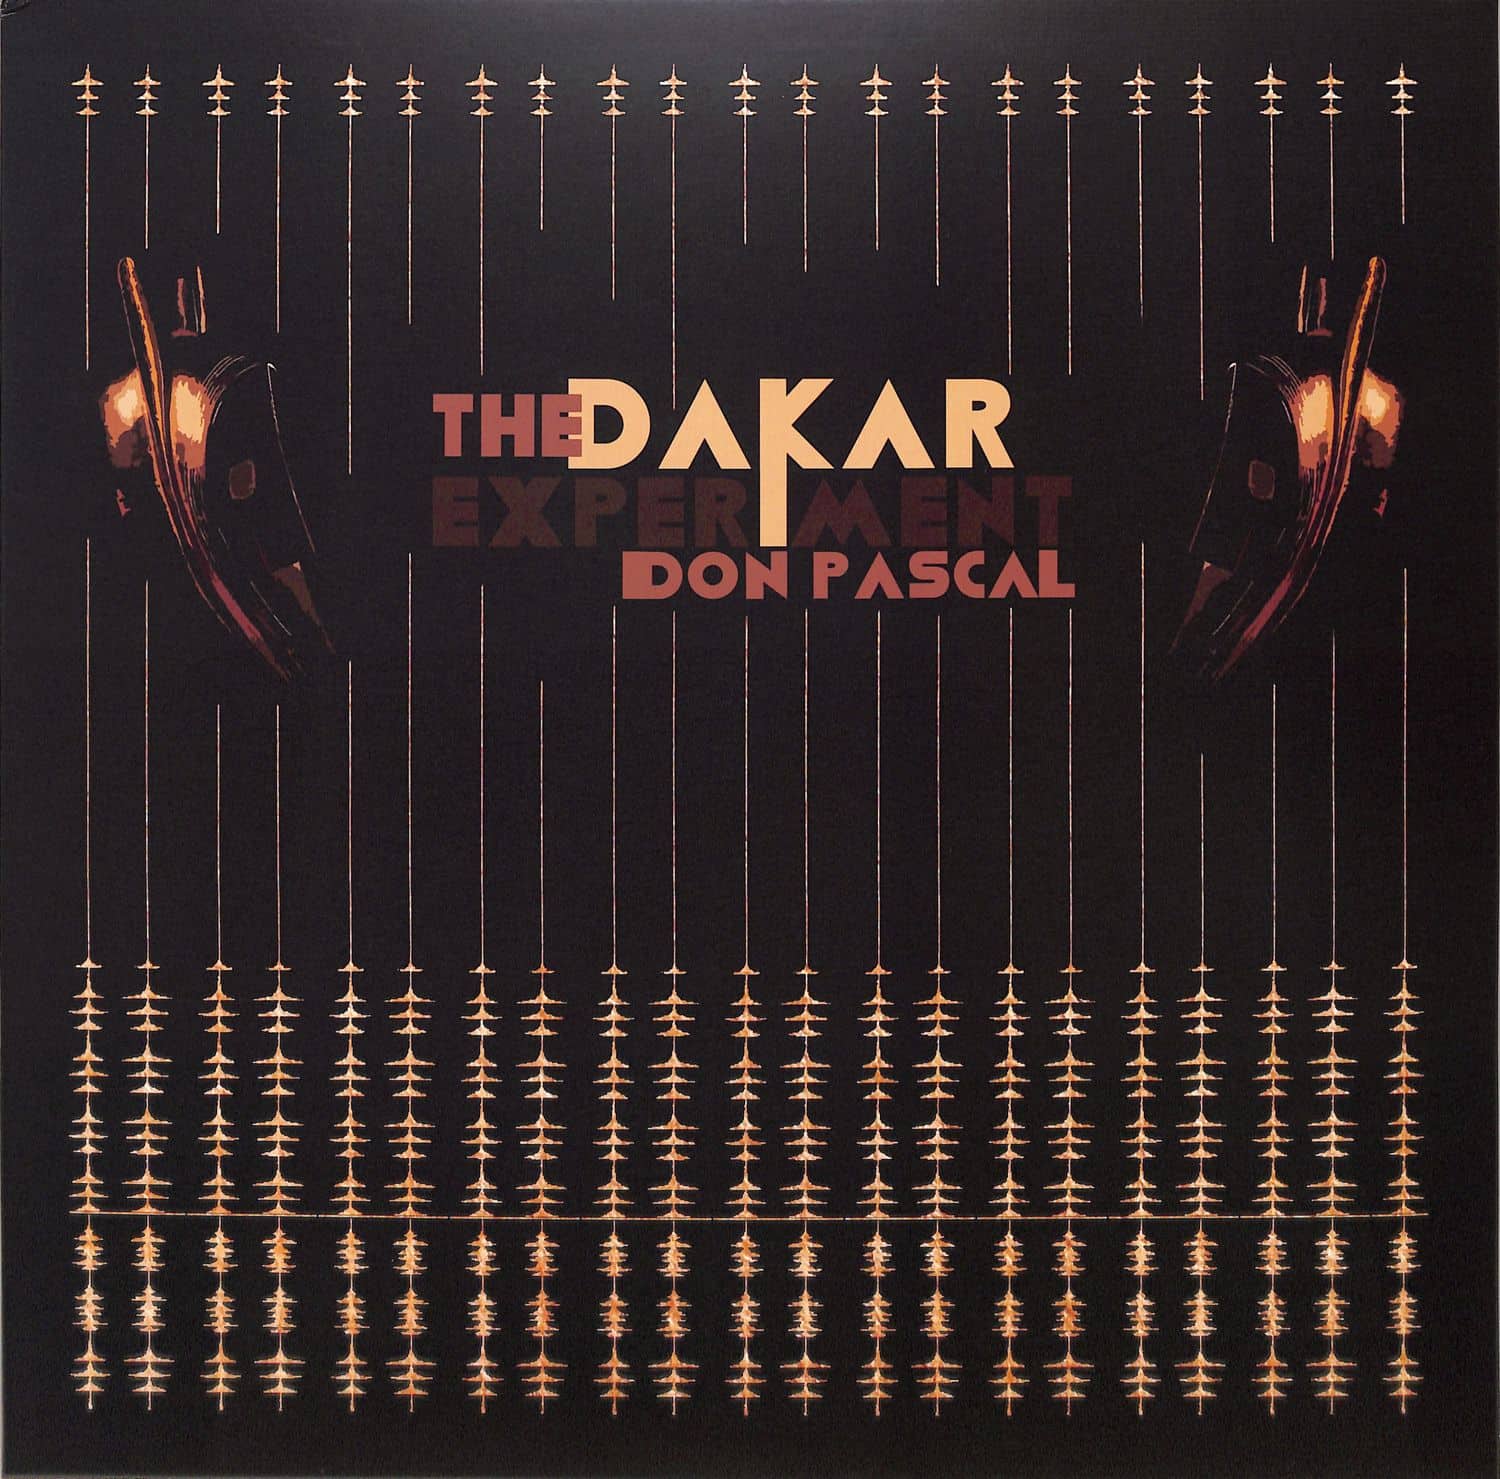 Don Pascal - THE DAKAR EXPERIMENT 